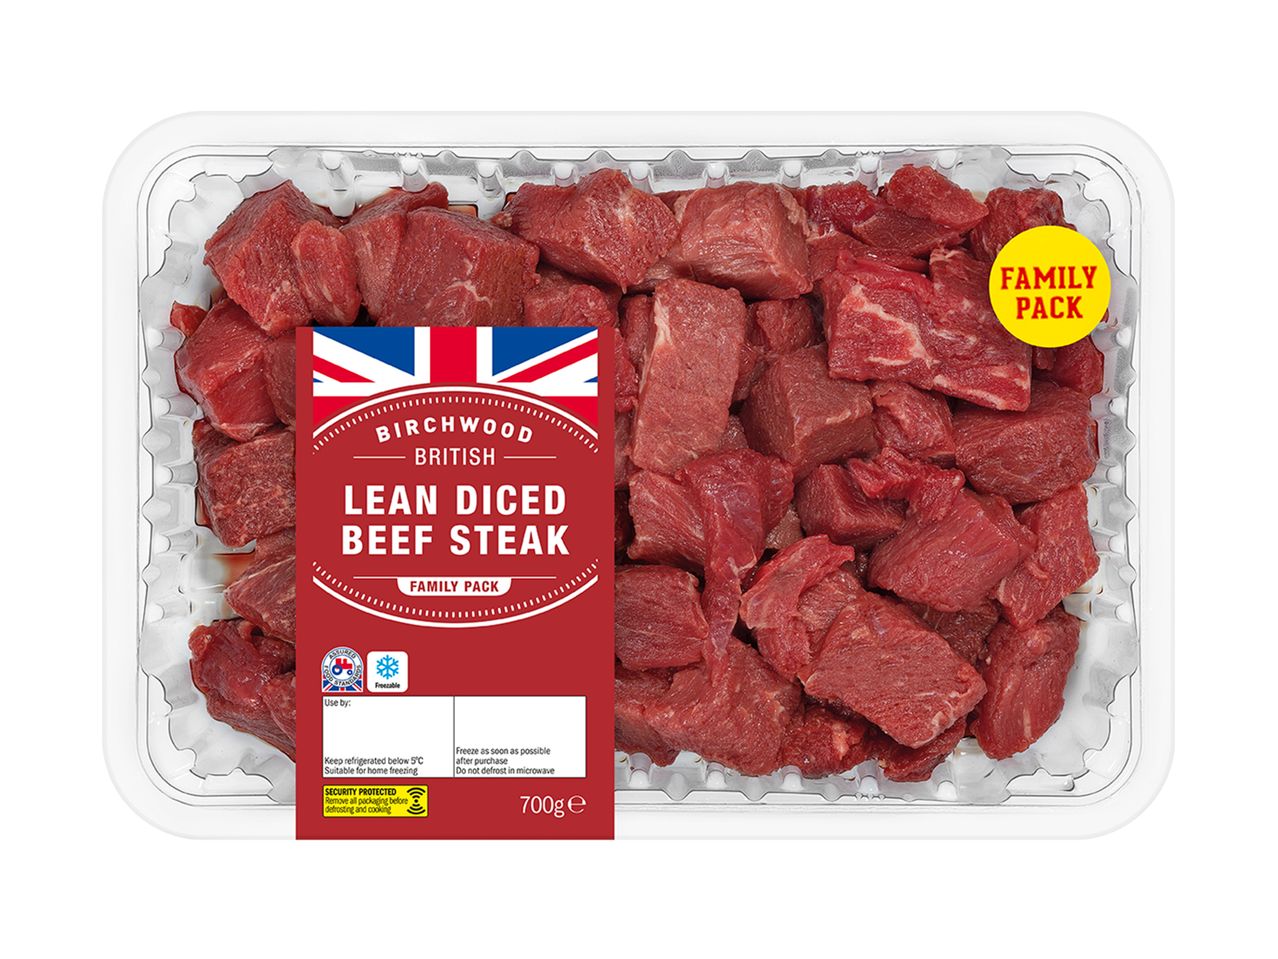 Go to full screen view: Birchwood British Lean Diced Beef Steak - Image 1